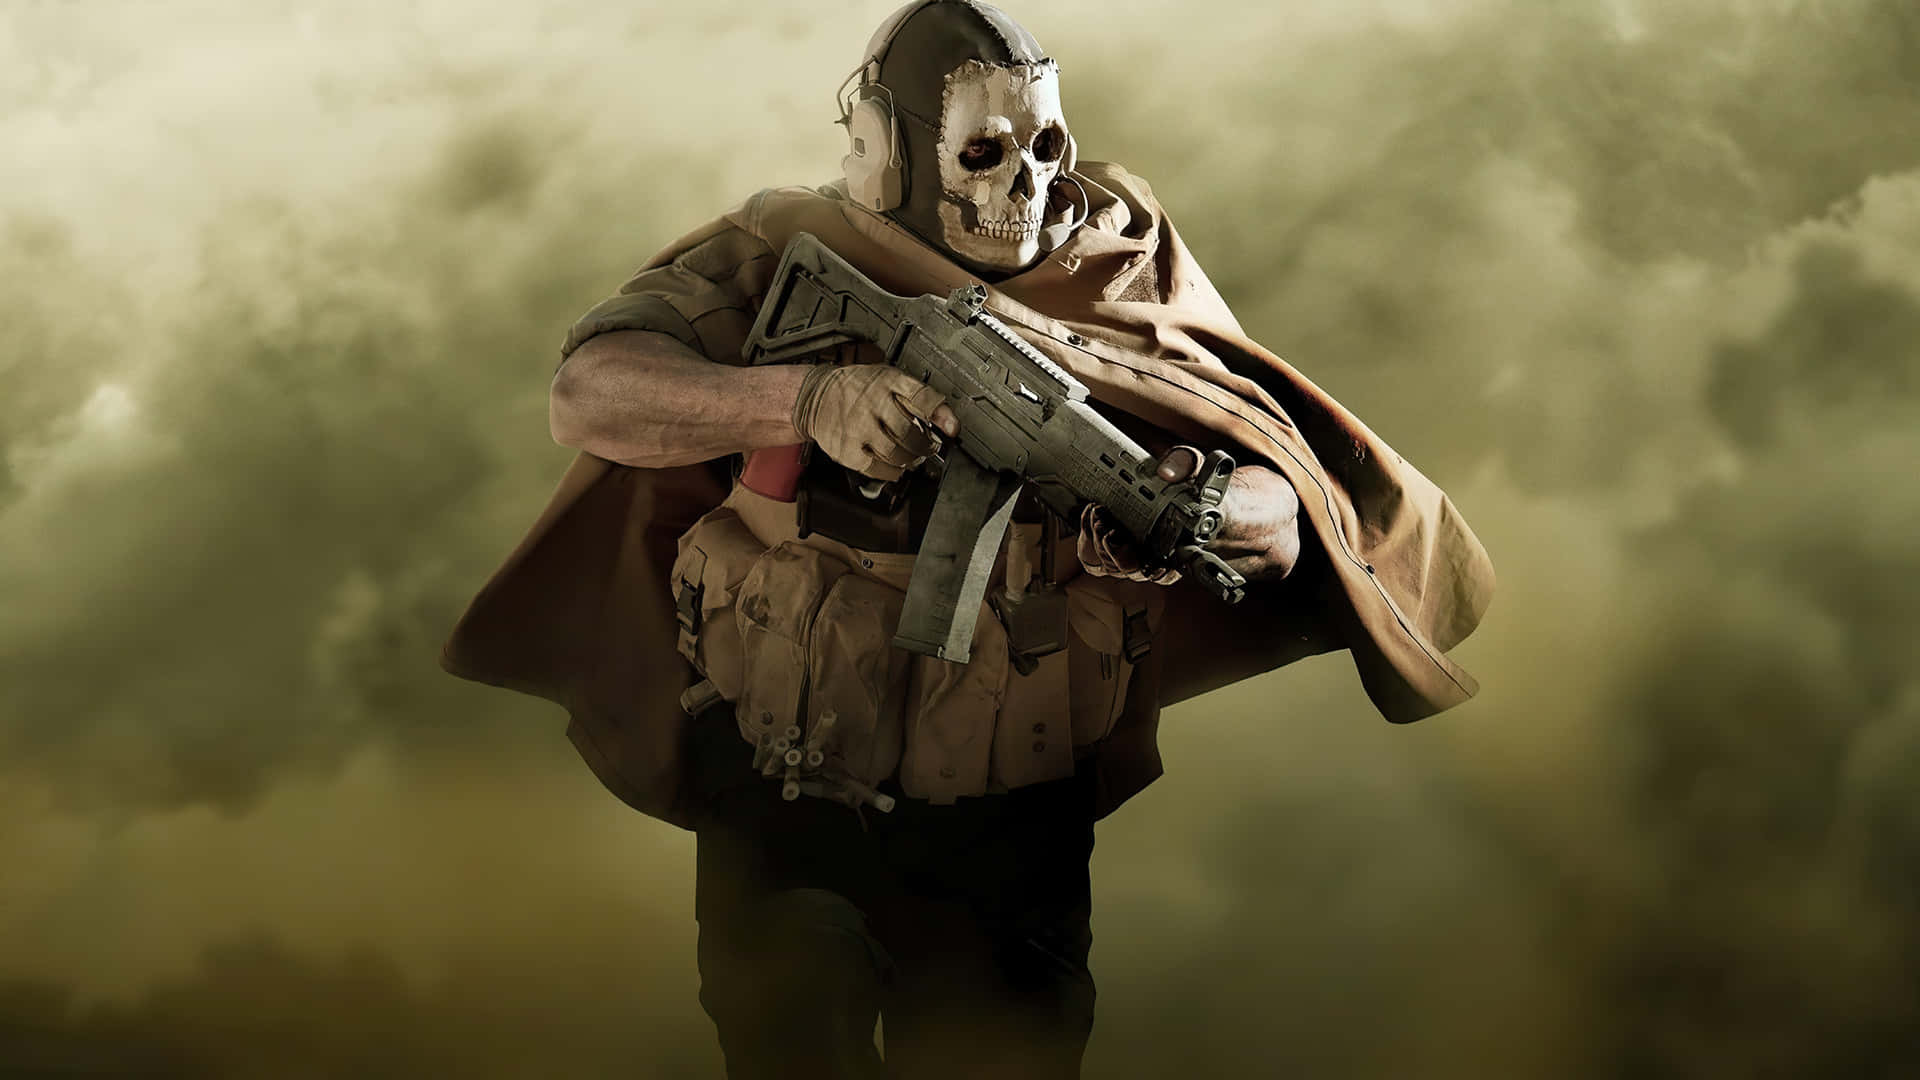 Soldatbereit Für Den Kampf In Call Of Duty: Modern Warfare Wallpaper